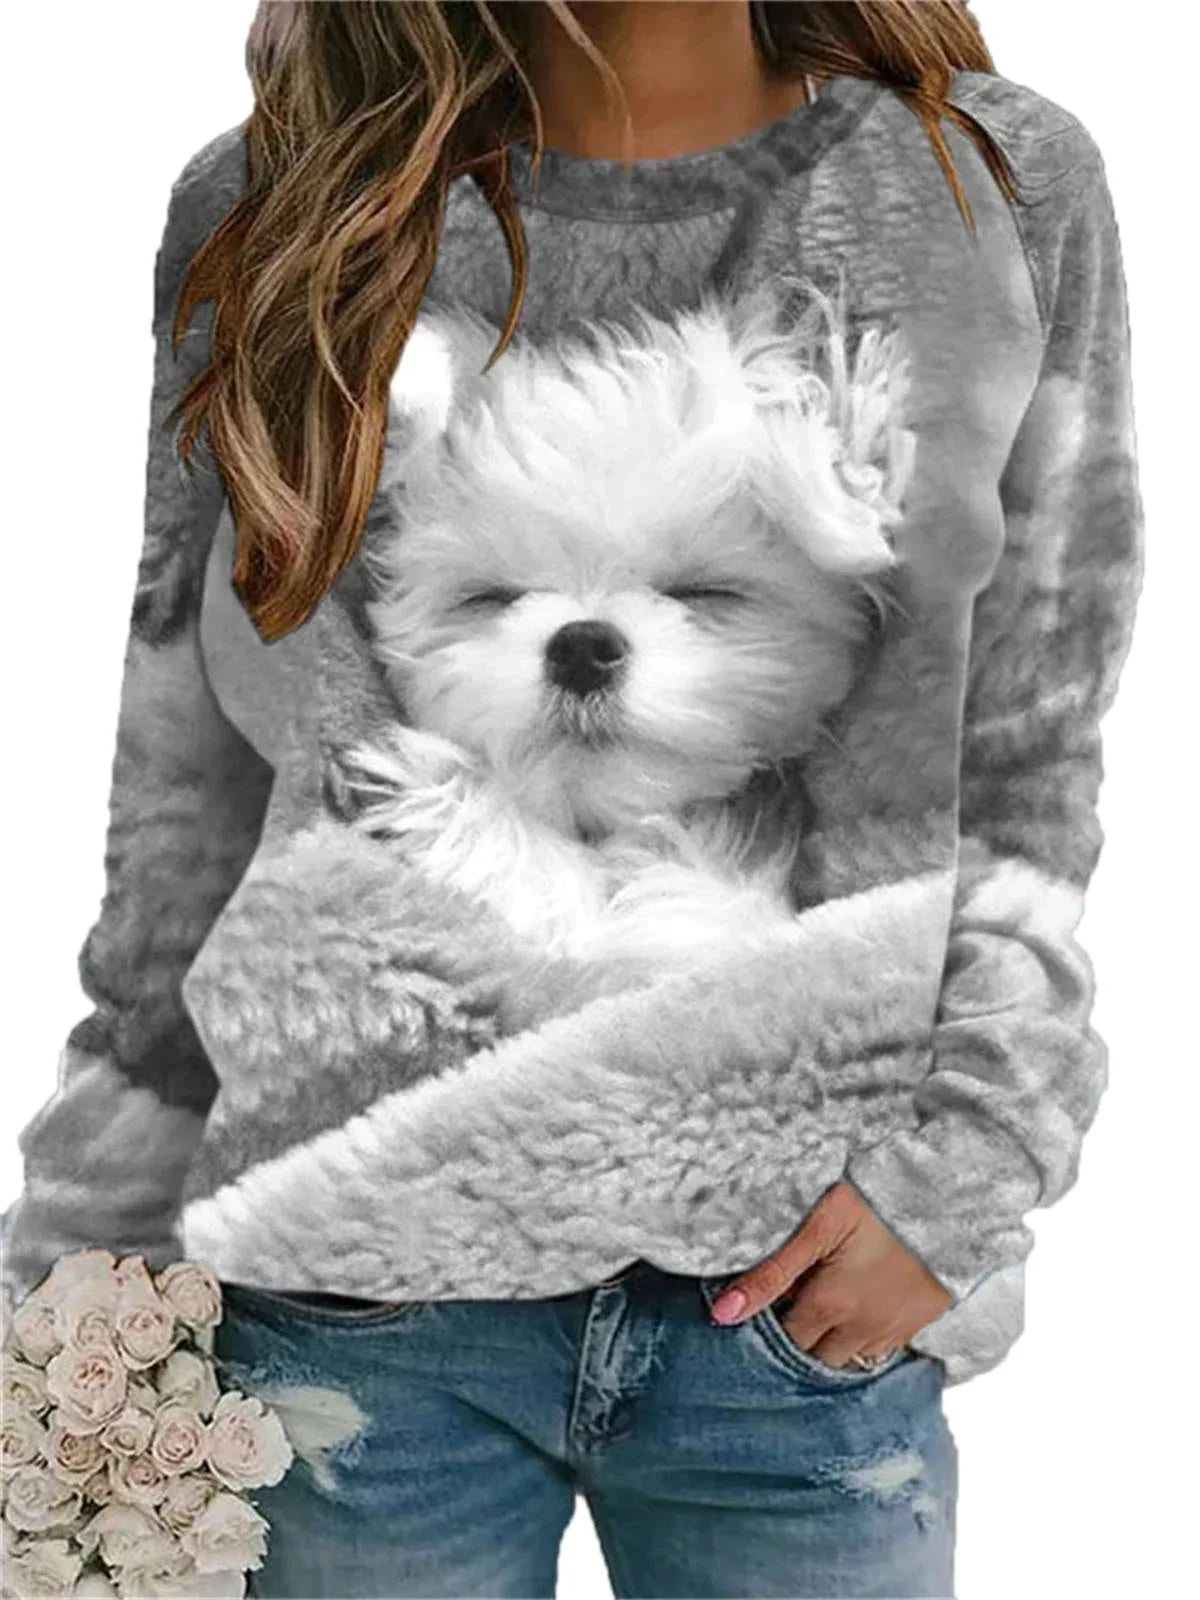 3D T-shirt Cat ai Fashion Animal Cute Pet Print-All10dollars.com